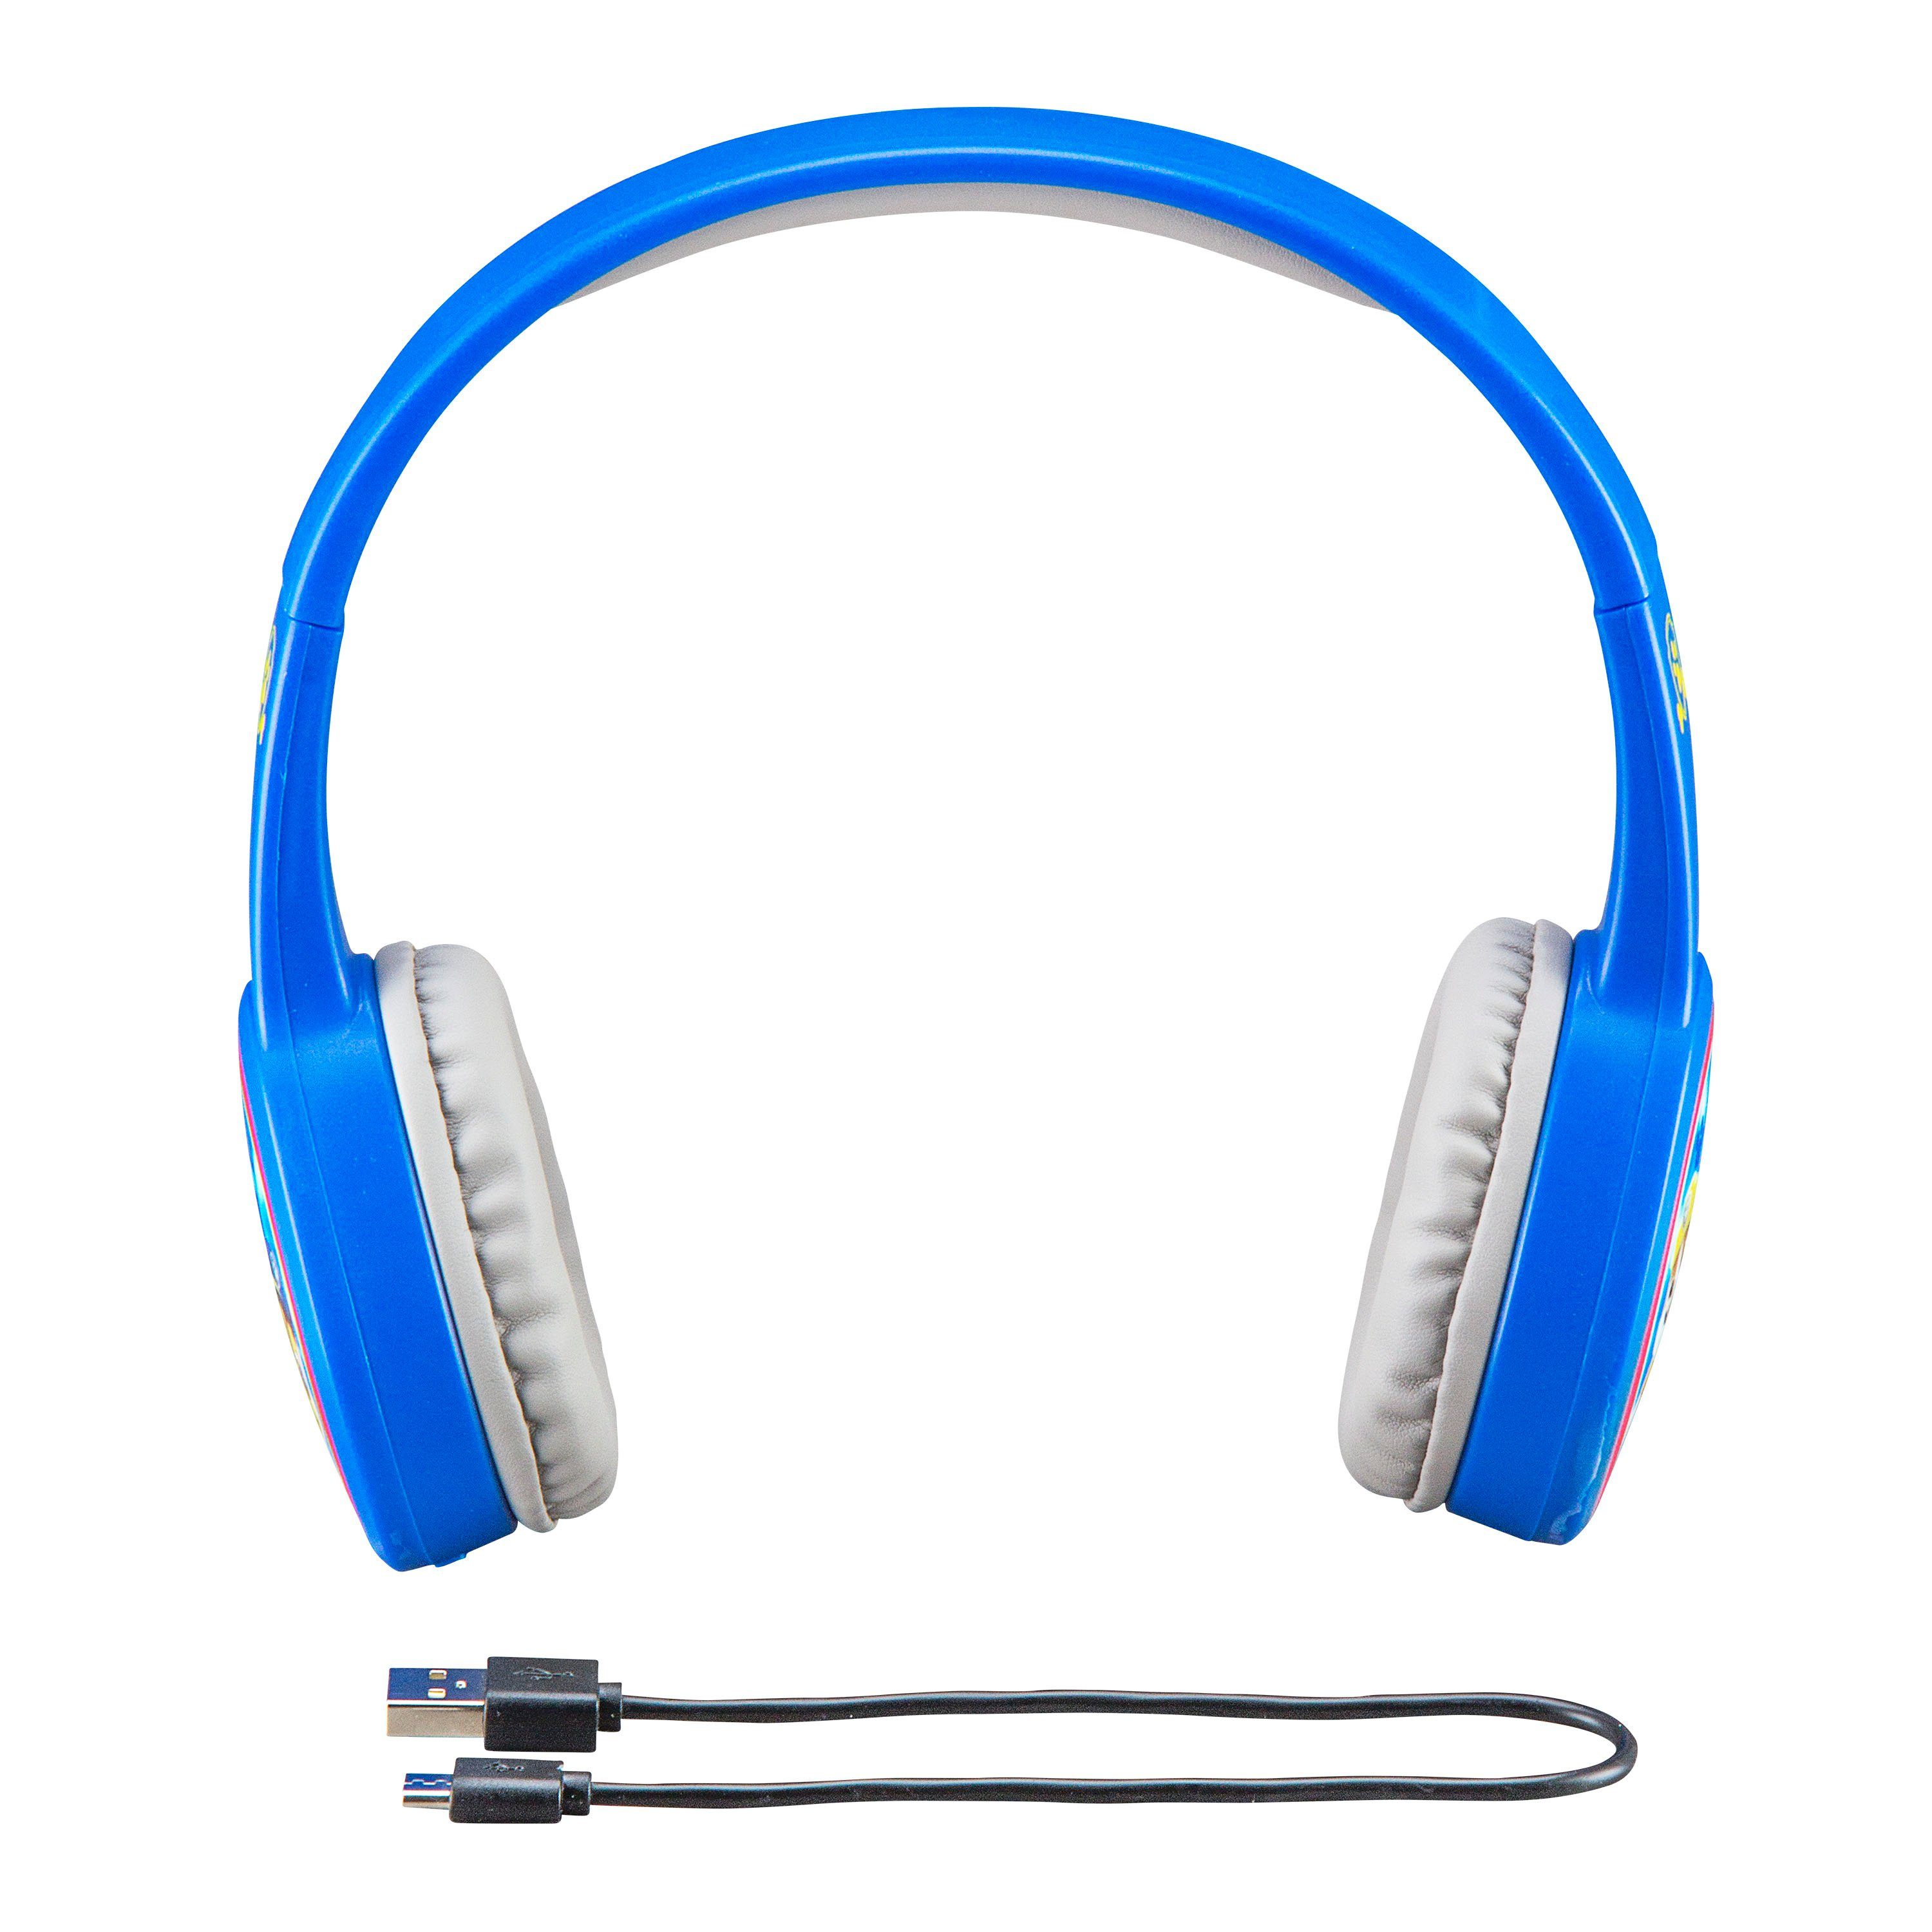 Bluetooth-Kopfhörer, eKids blau PW-B36VM, Bluetooth-Kopfhörer eKids Paw Patrol